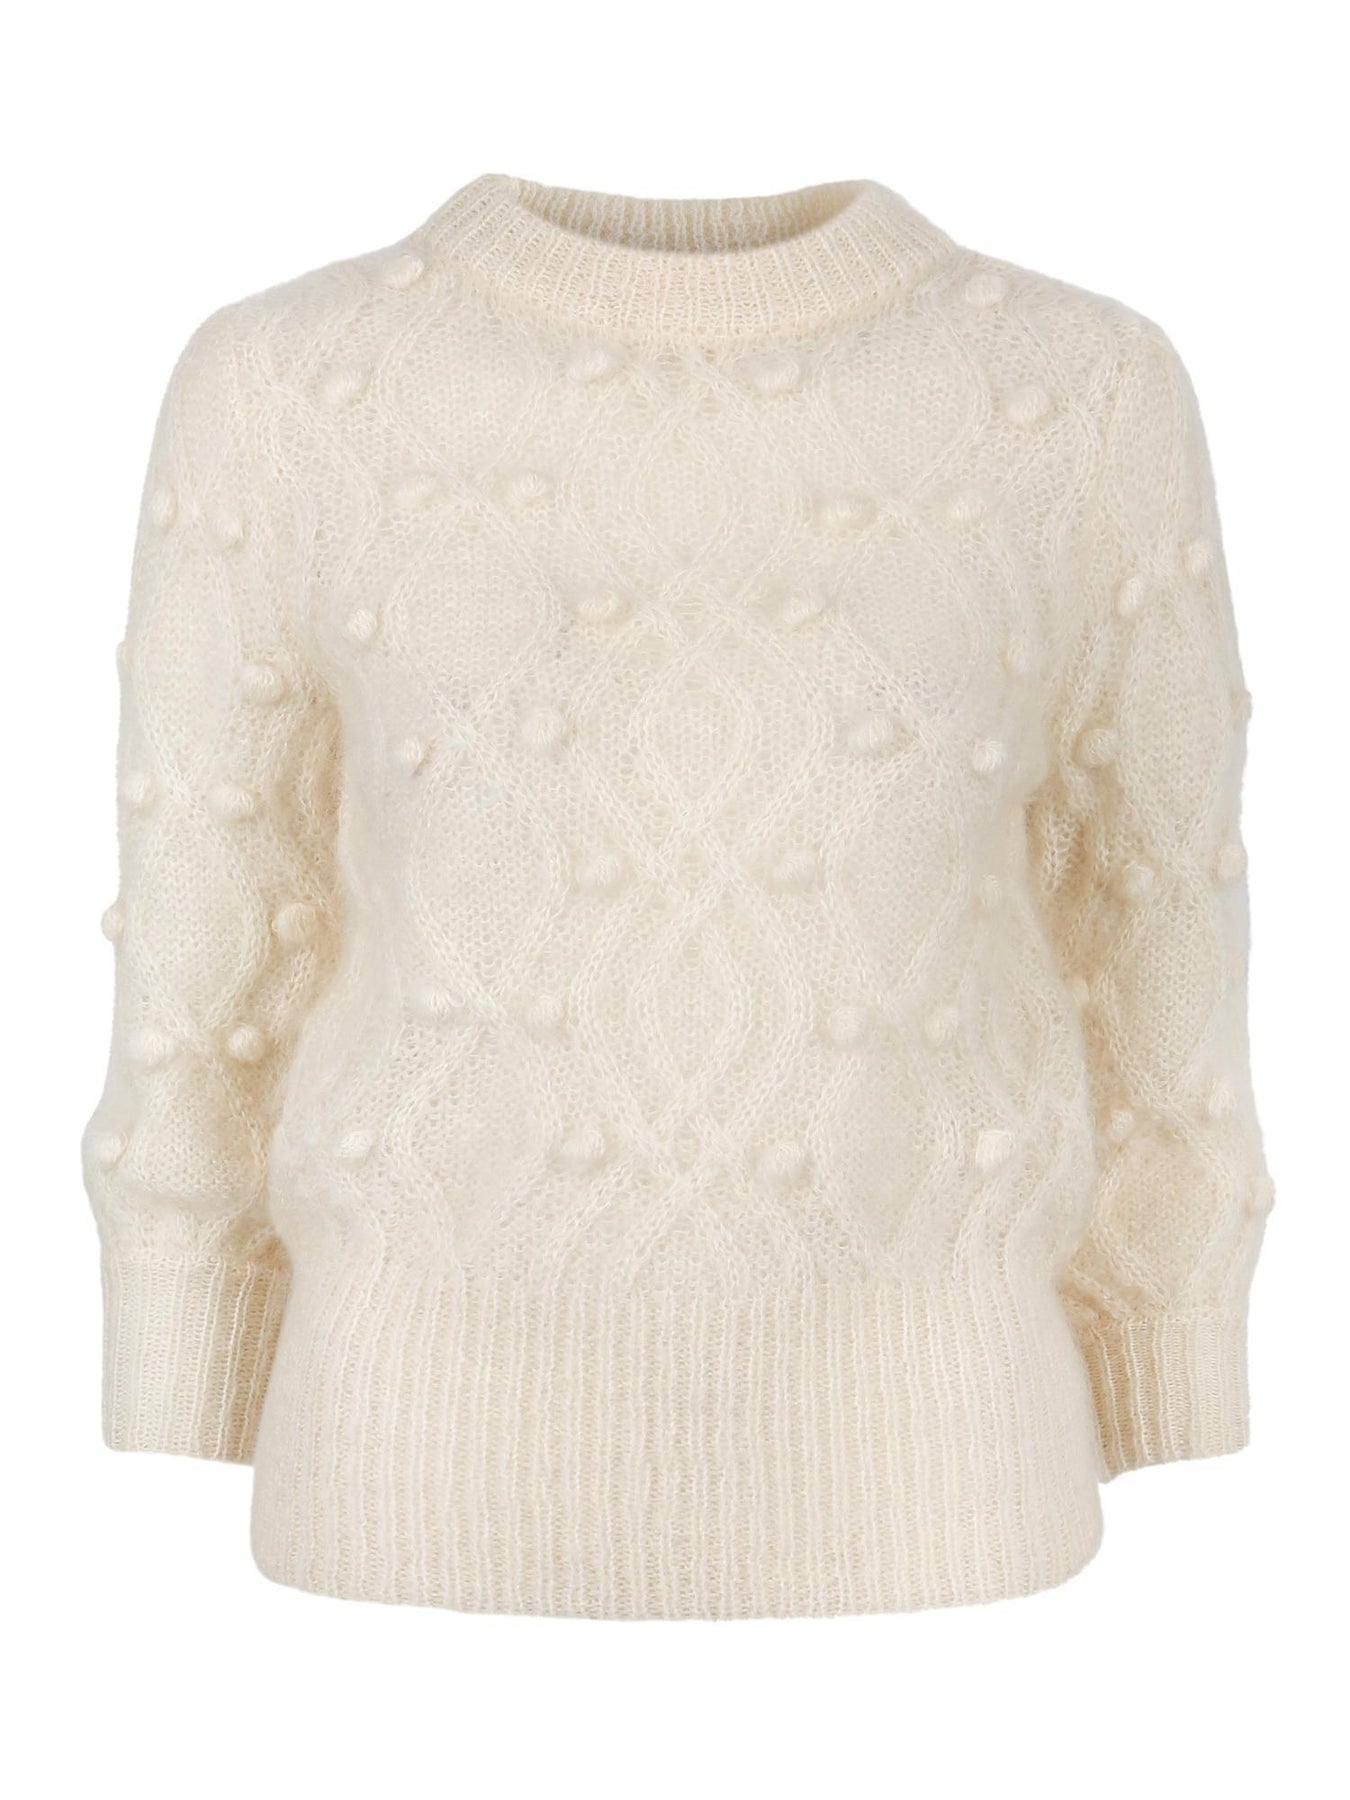 Sienna Chunky Knit Sweater - White - Ella & il - Gensere - VILLOID.no